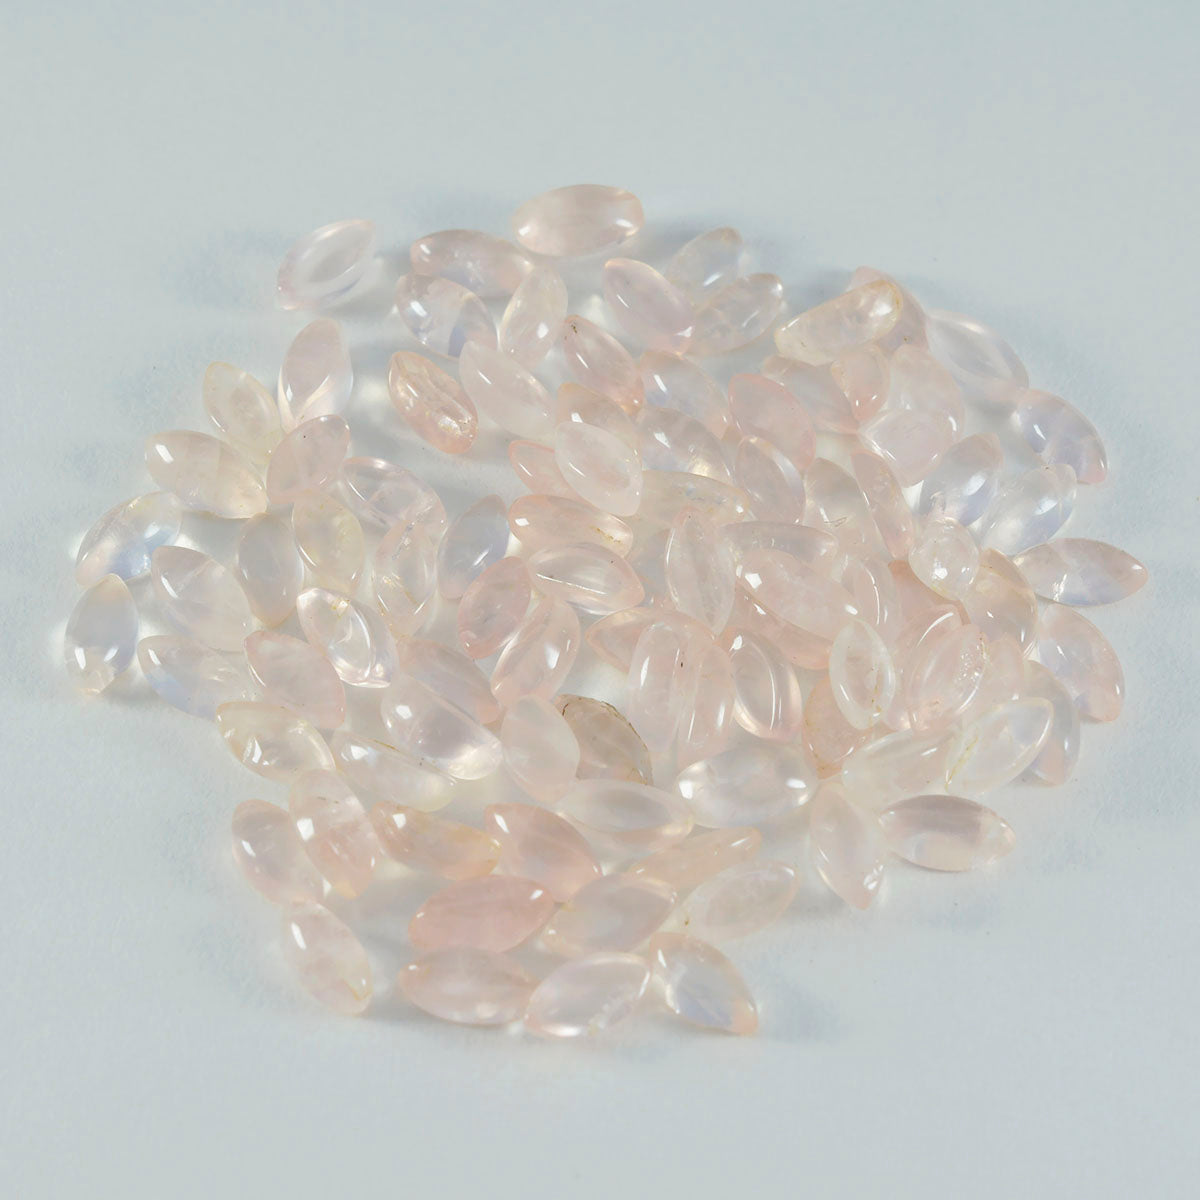 Riyogems 1PC Pink Rose Quartz Cabochon 3x6 mm Marquise Shape Good Quality Gems